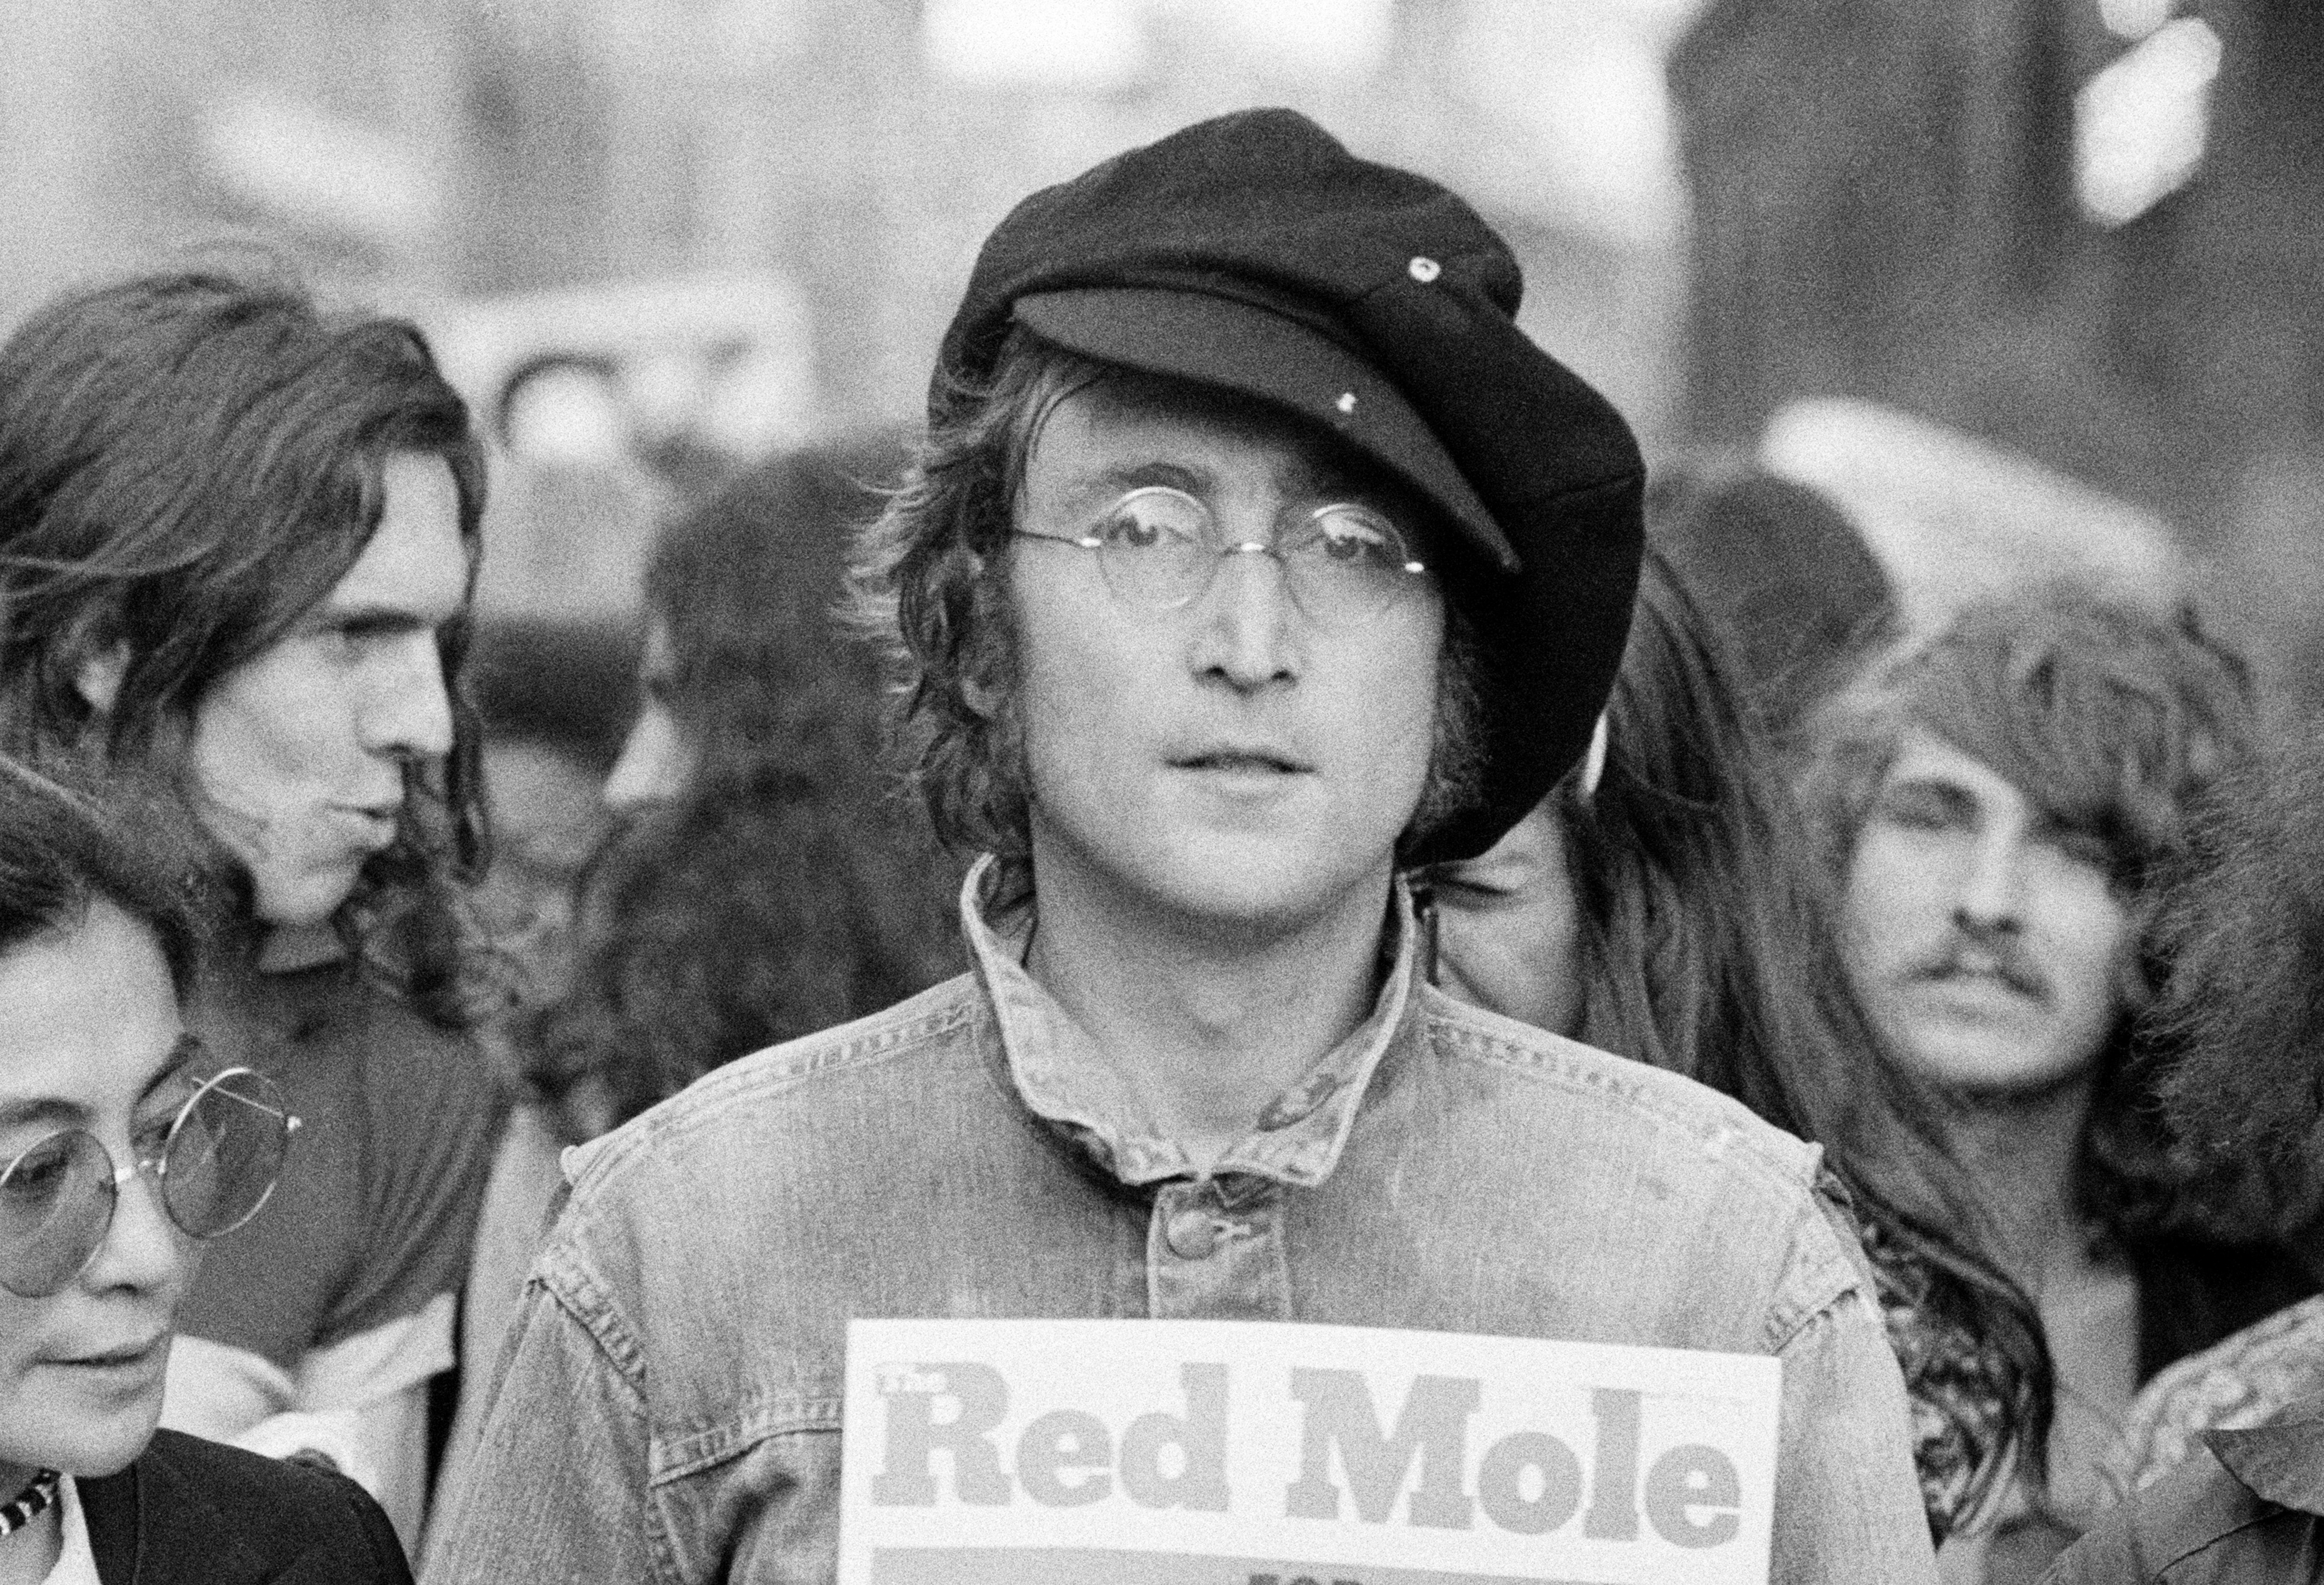 John Lennon Explained the Nonviolent Meaning of The Beatles’ ‘Revolution’